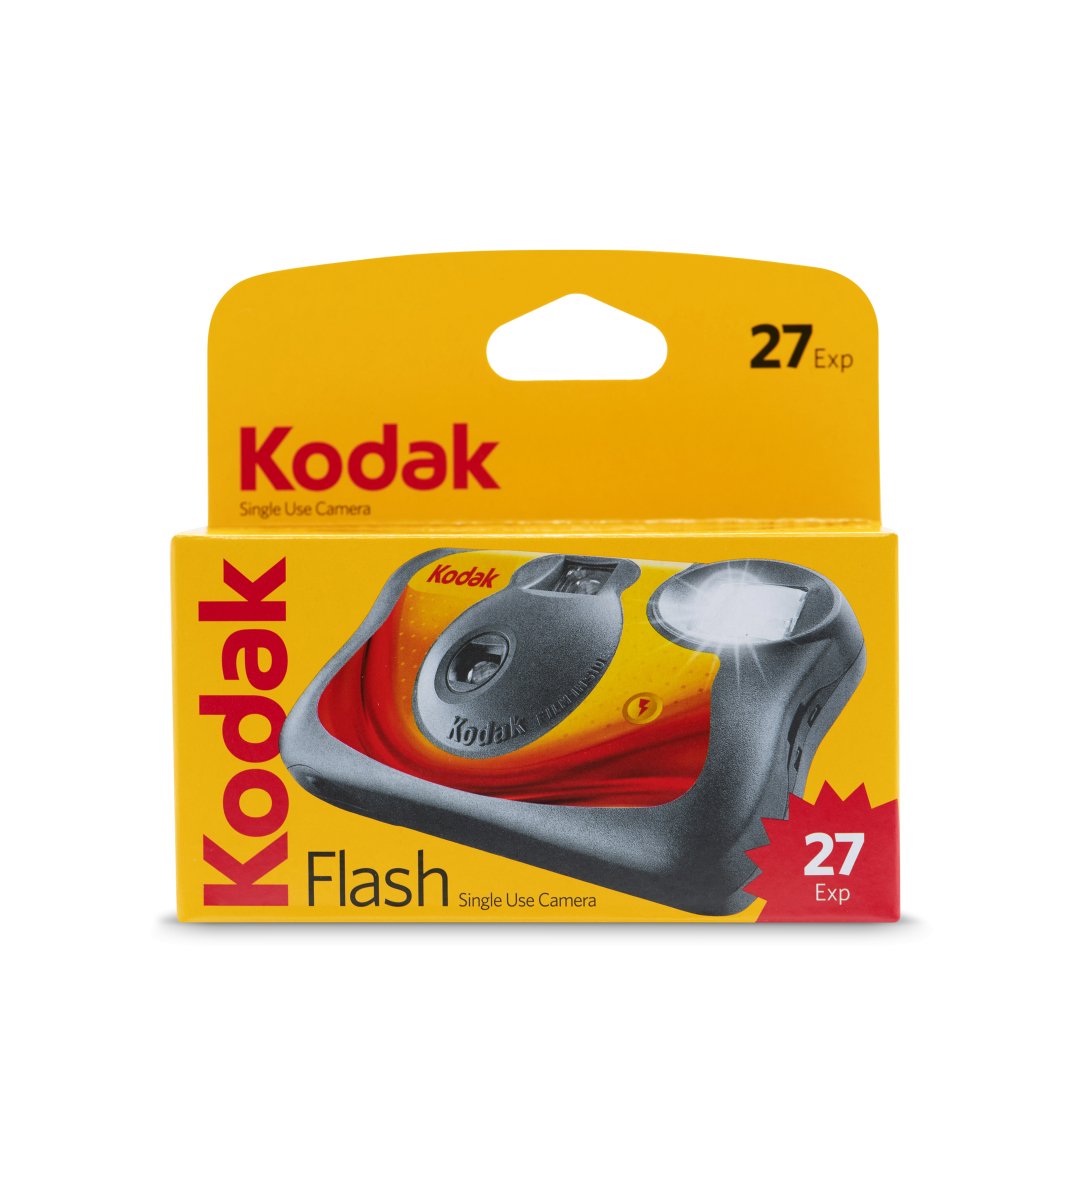 Kodak Flash 800 Disposable Camera - 35mm - 27 Exposure - Single Use Camera - Rewind Photo Lab - Kodak